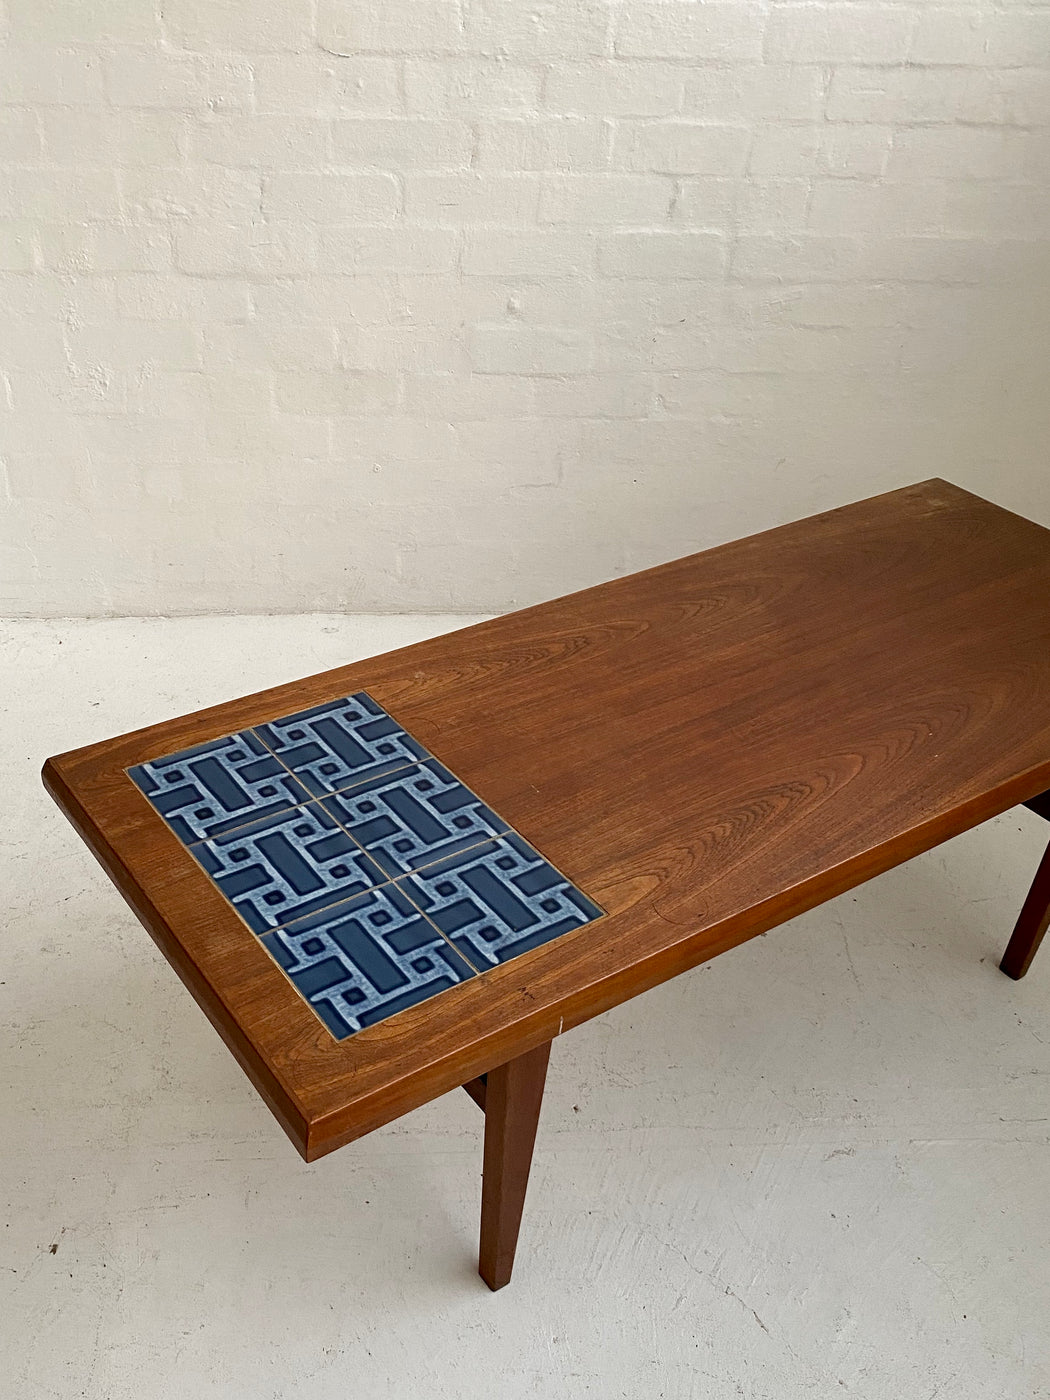 Danish Coffee Table with Tile Inlay